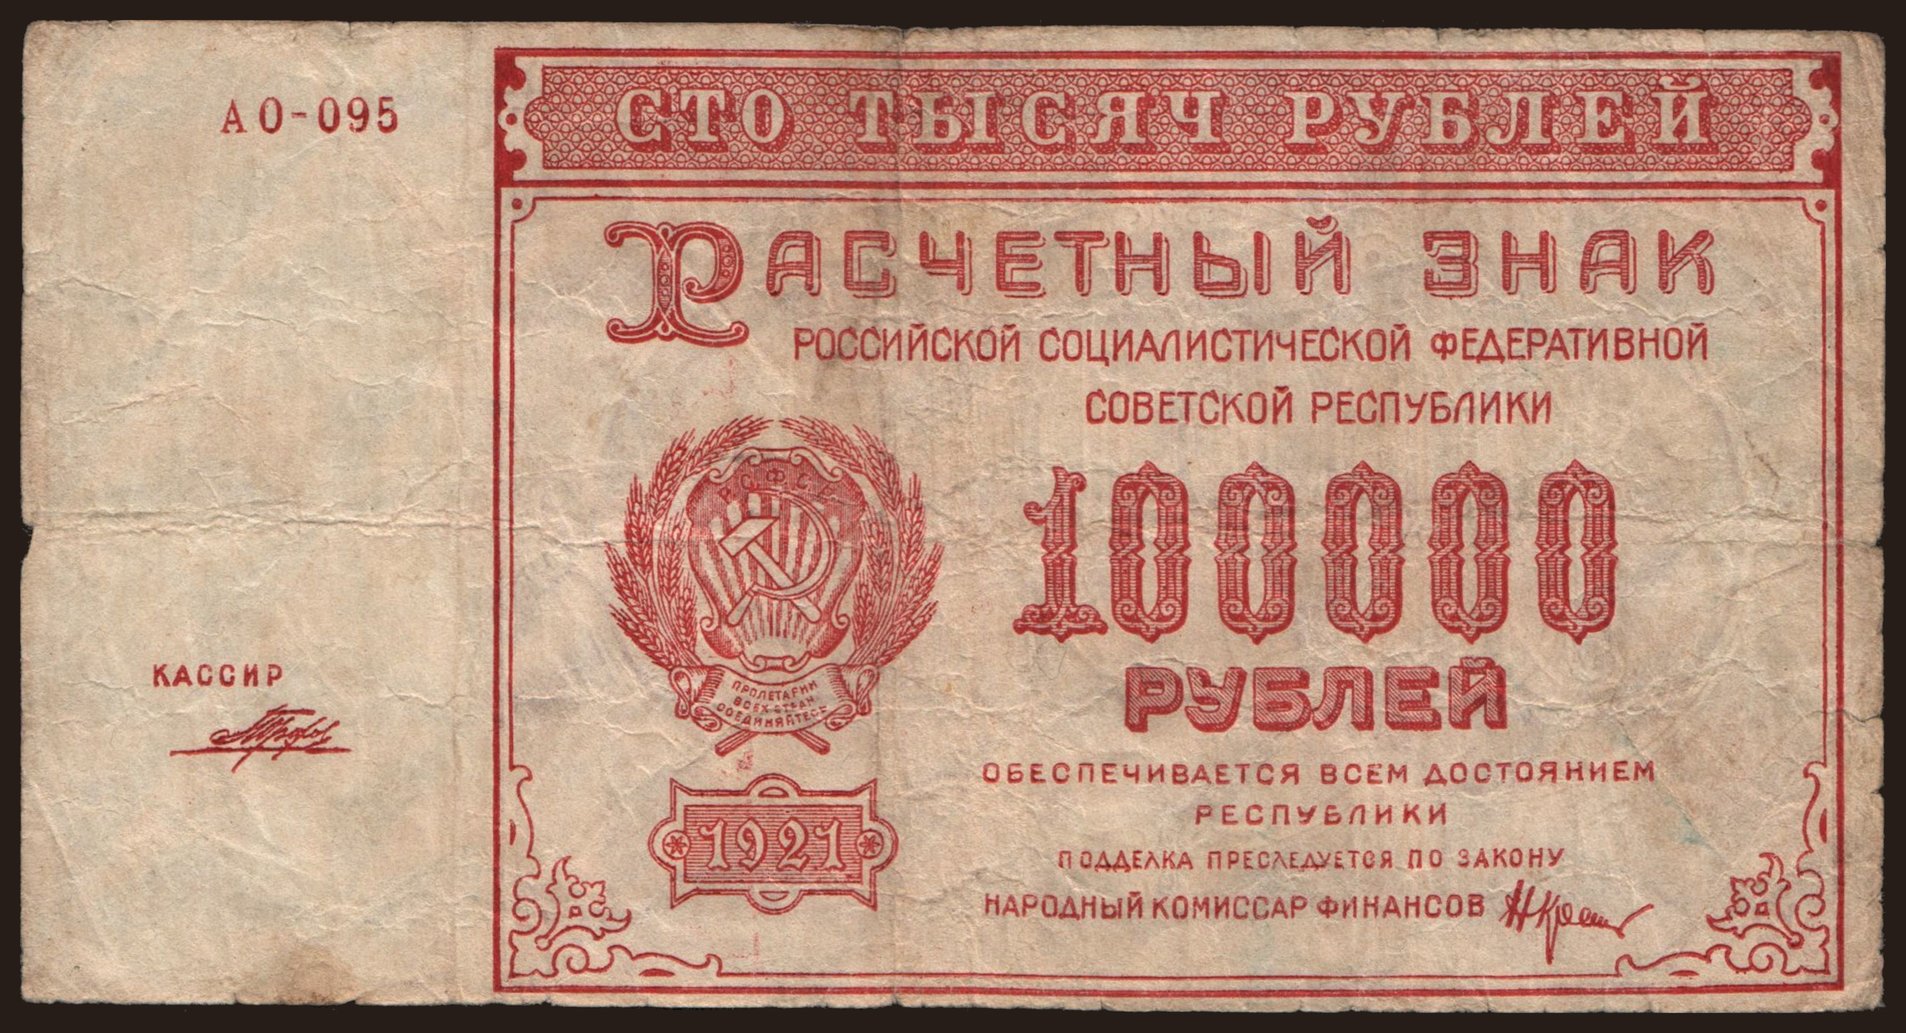 100.000 rubel, 1921